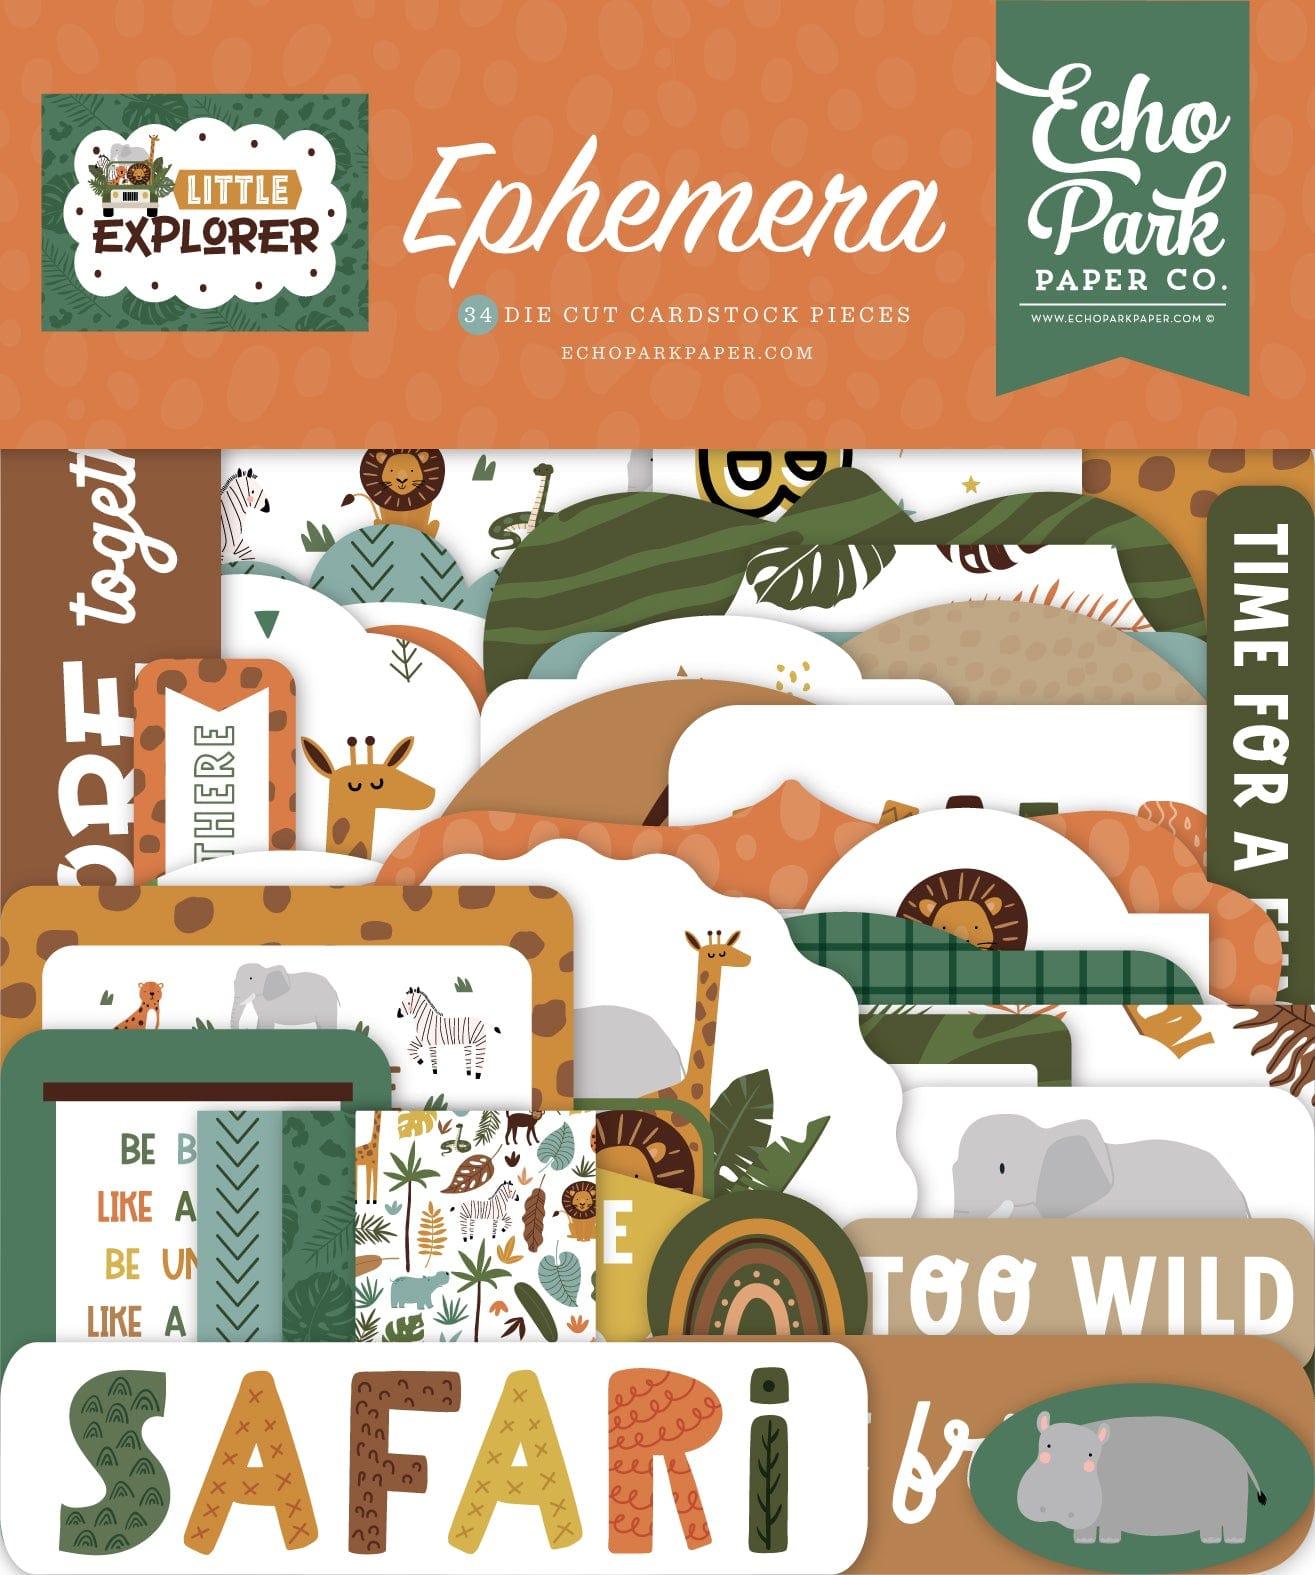 Little Explorer Collection 5 x 5 Scrapbook Ephemera by Echo Park Paper - Scrapbook Supply Companies